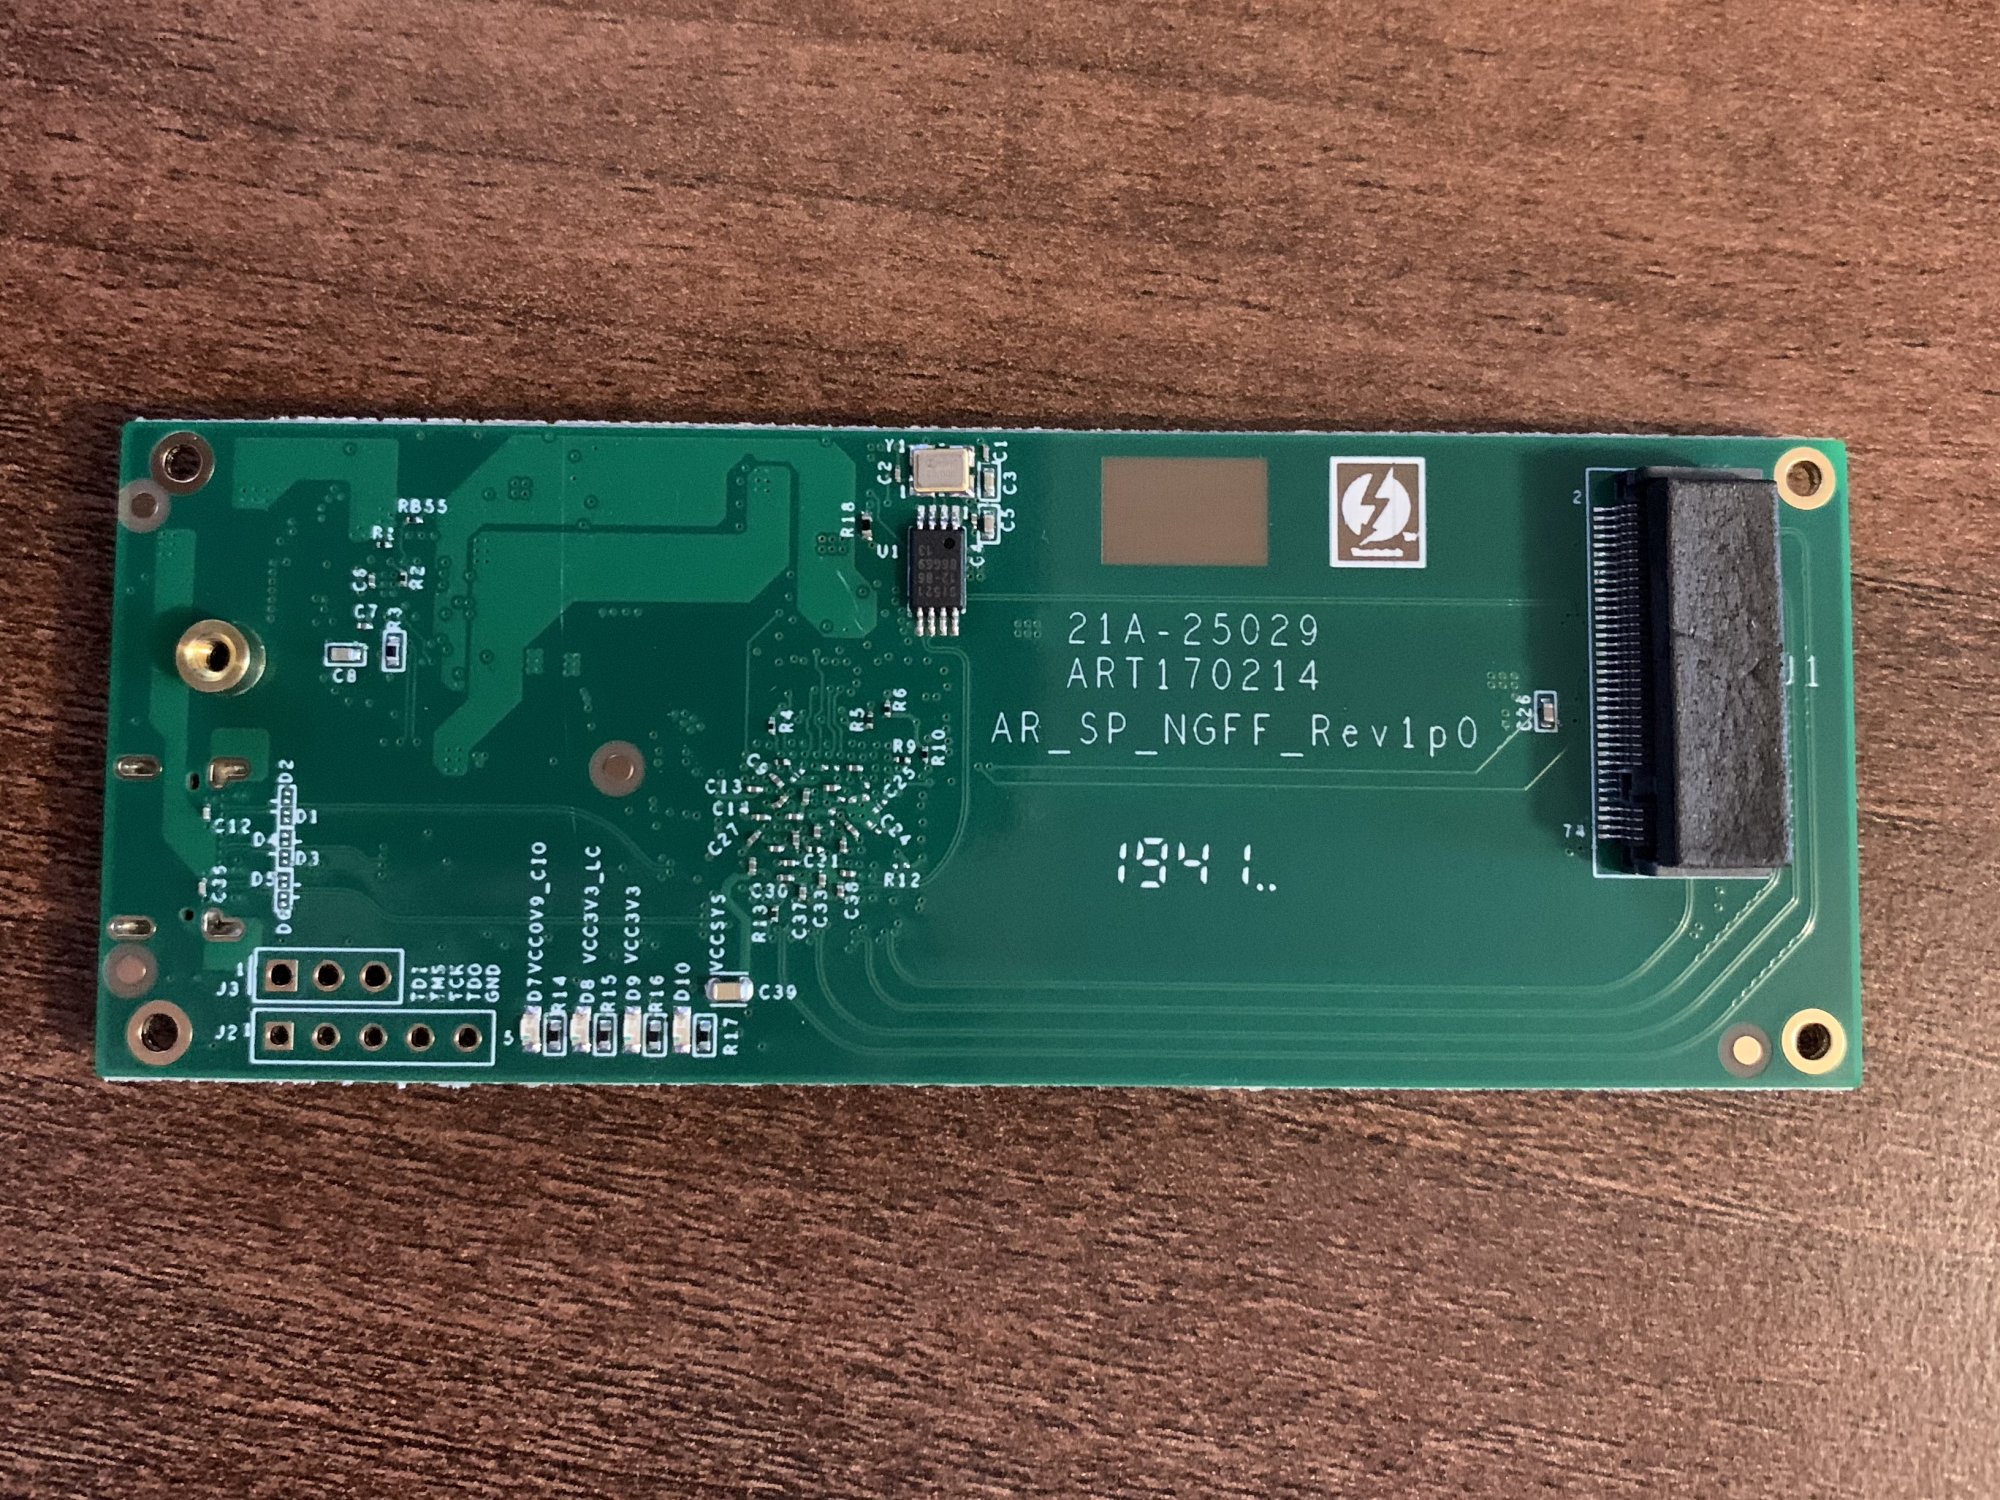 Thunderbolt 3 2TB NVMe SSD Review - MacRumors